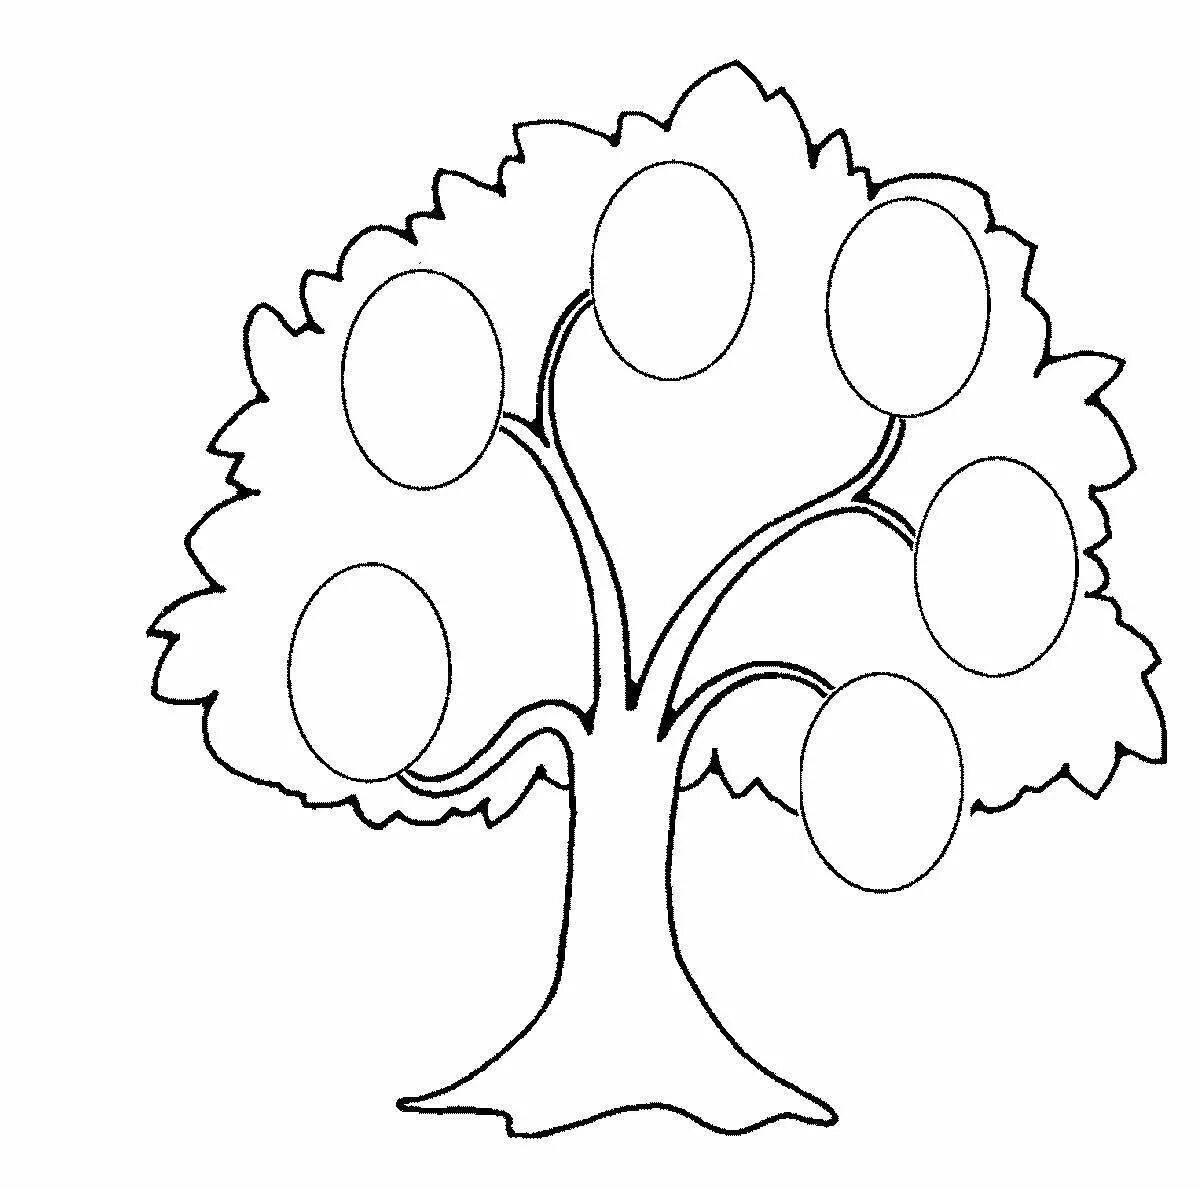 Elegant family tree template